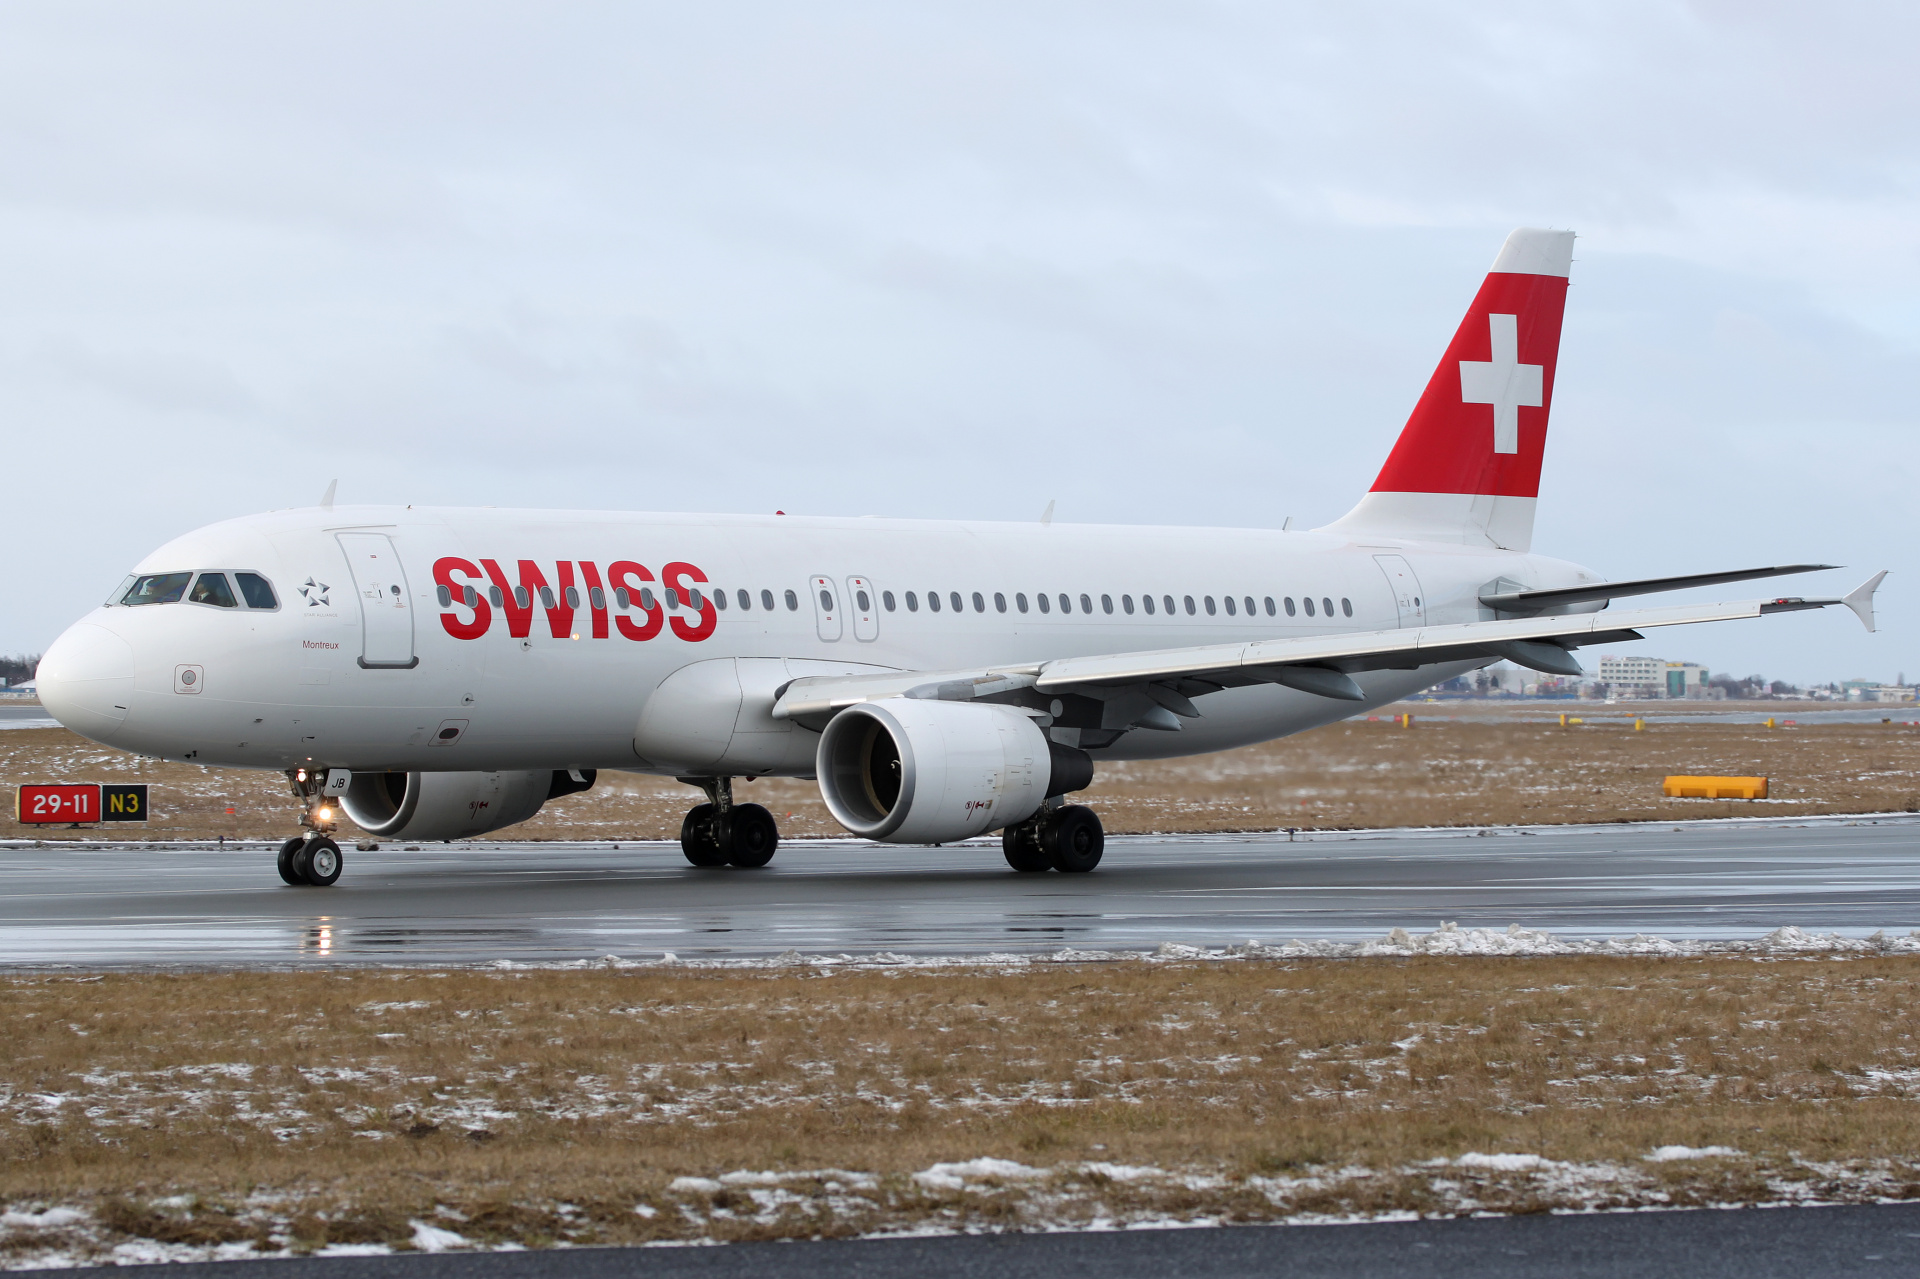 HB-IJB (Aircraft » EPWA Spotting » Airbus A320-200 » Swiss International Air Lines)